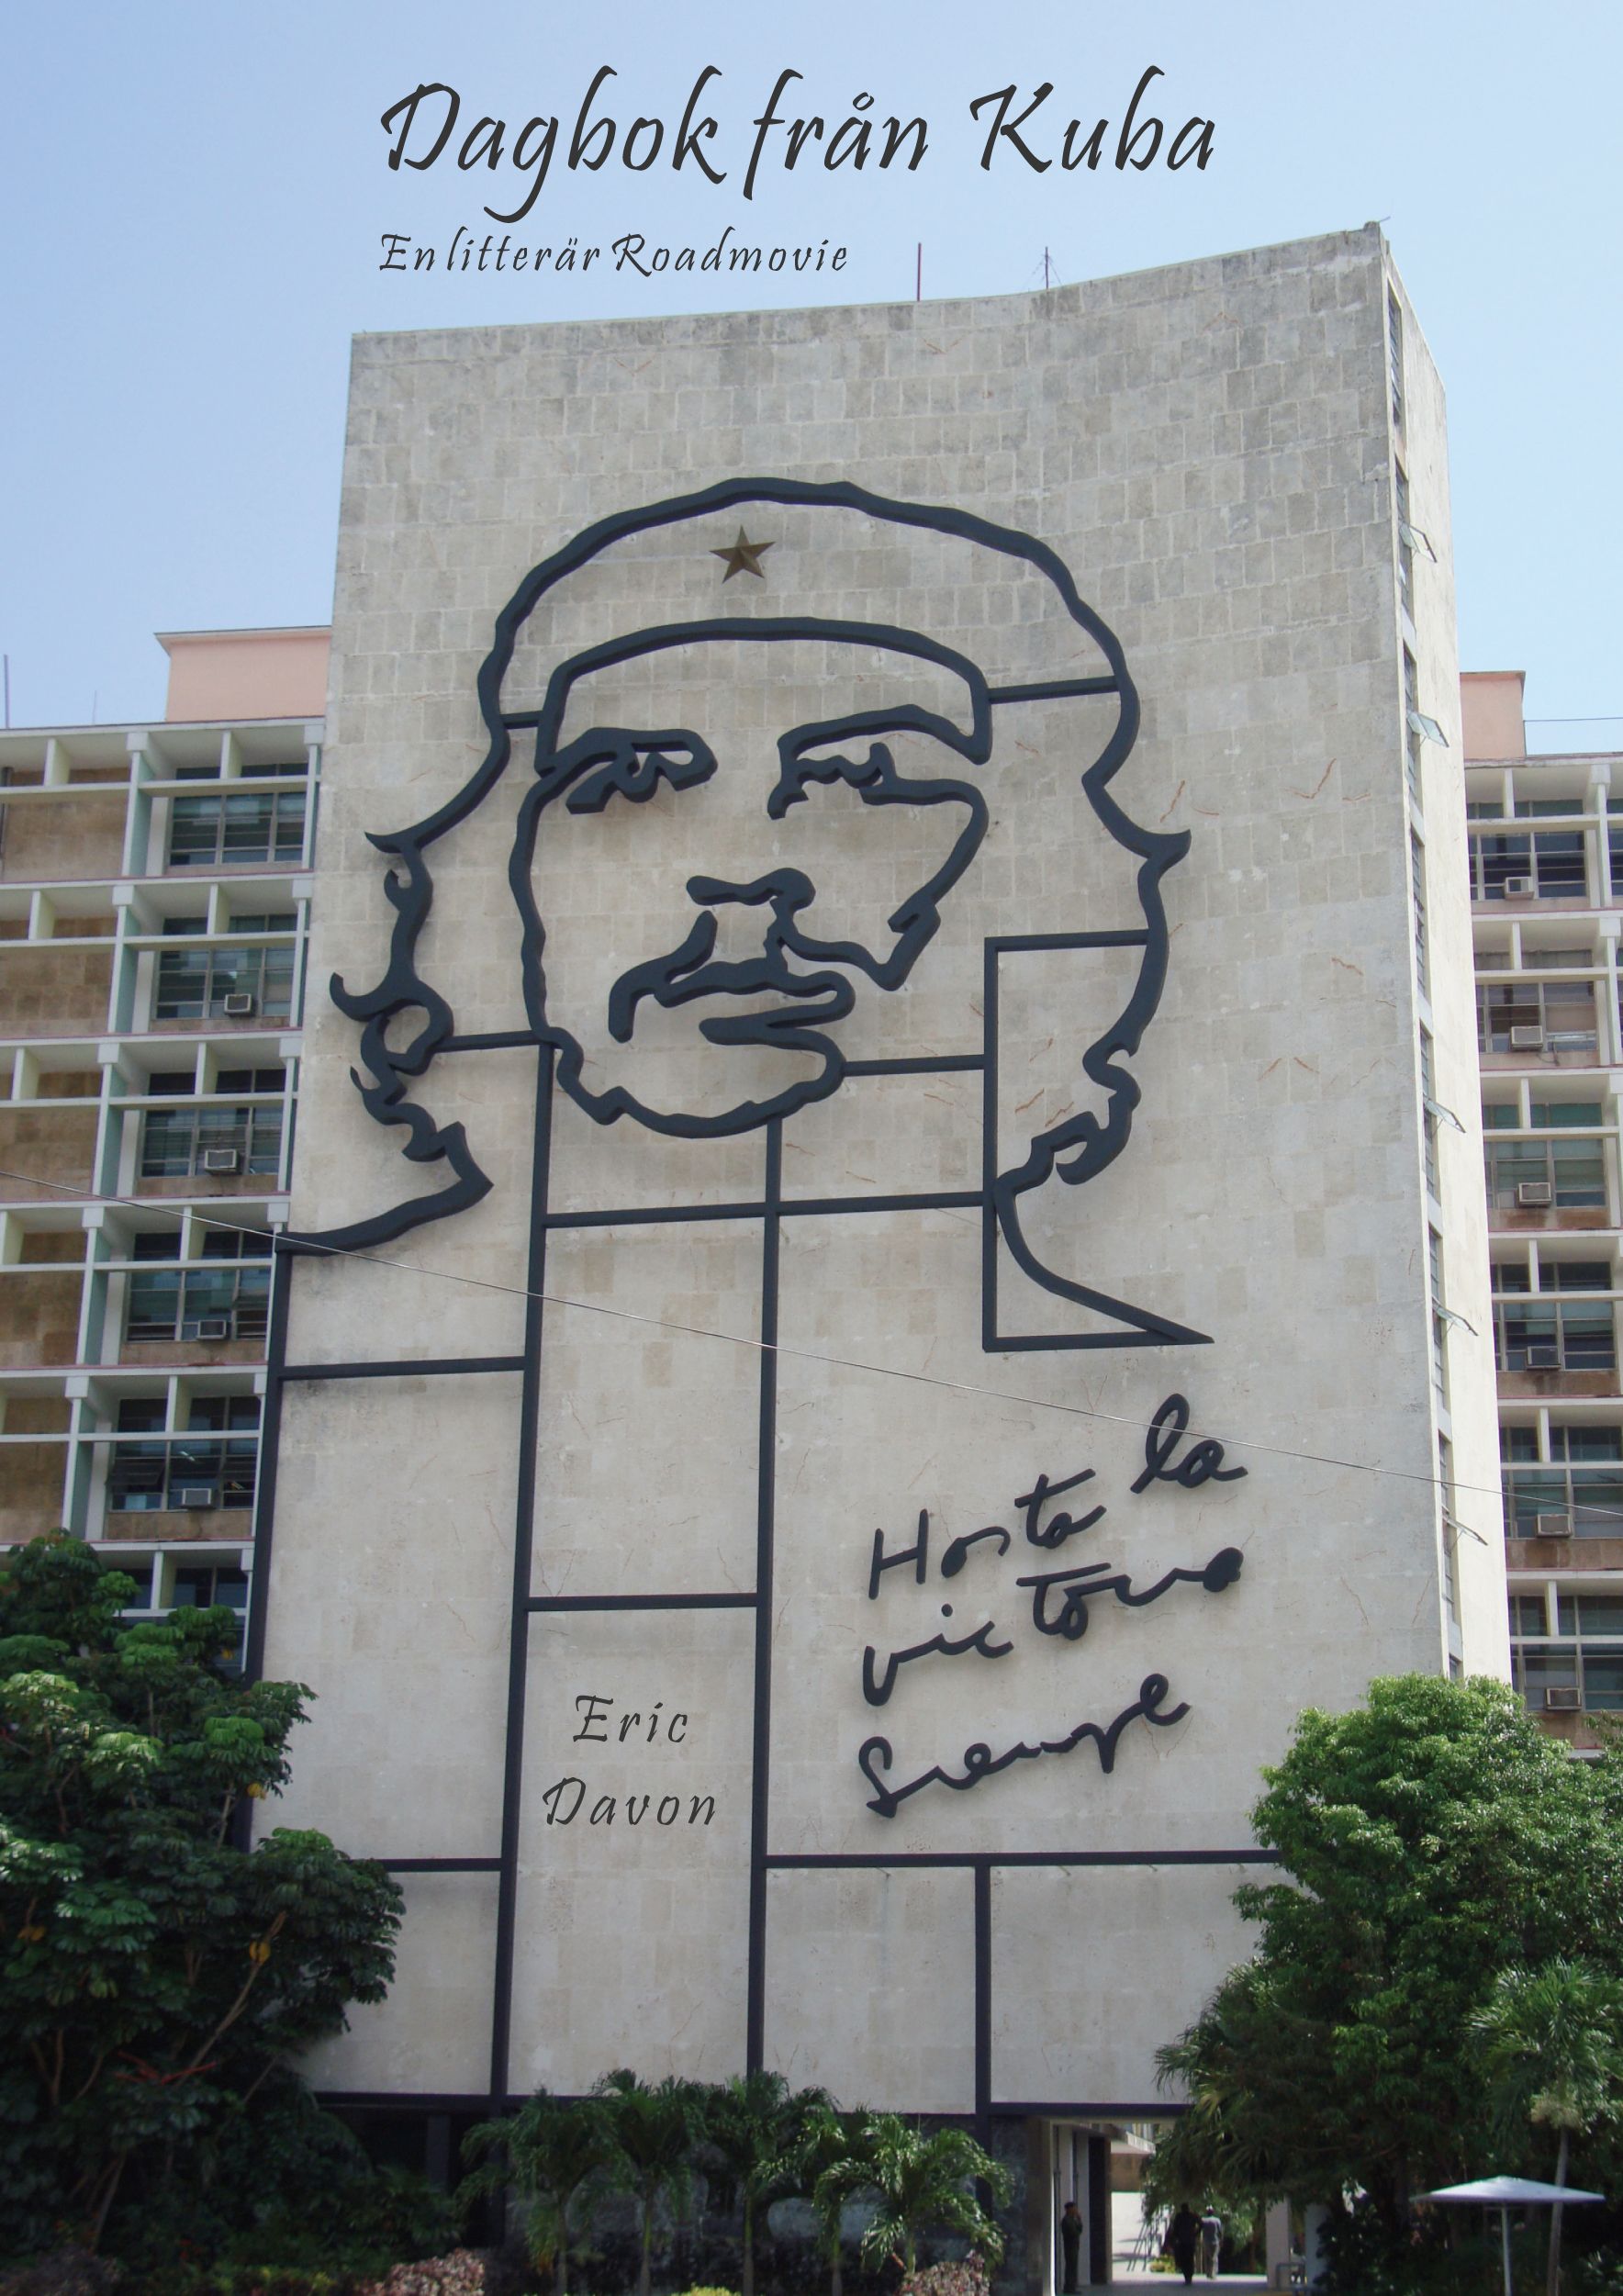 Dagbok från Kuba, e-bog af Eric Davon